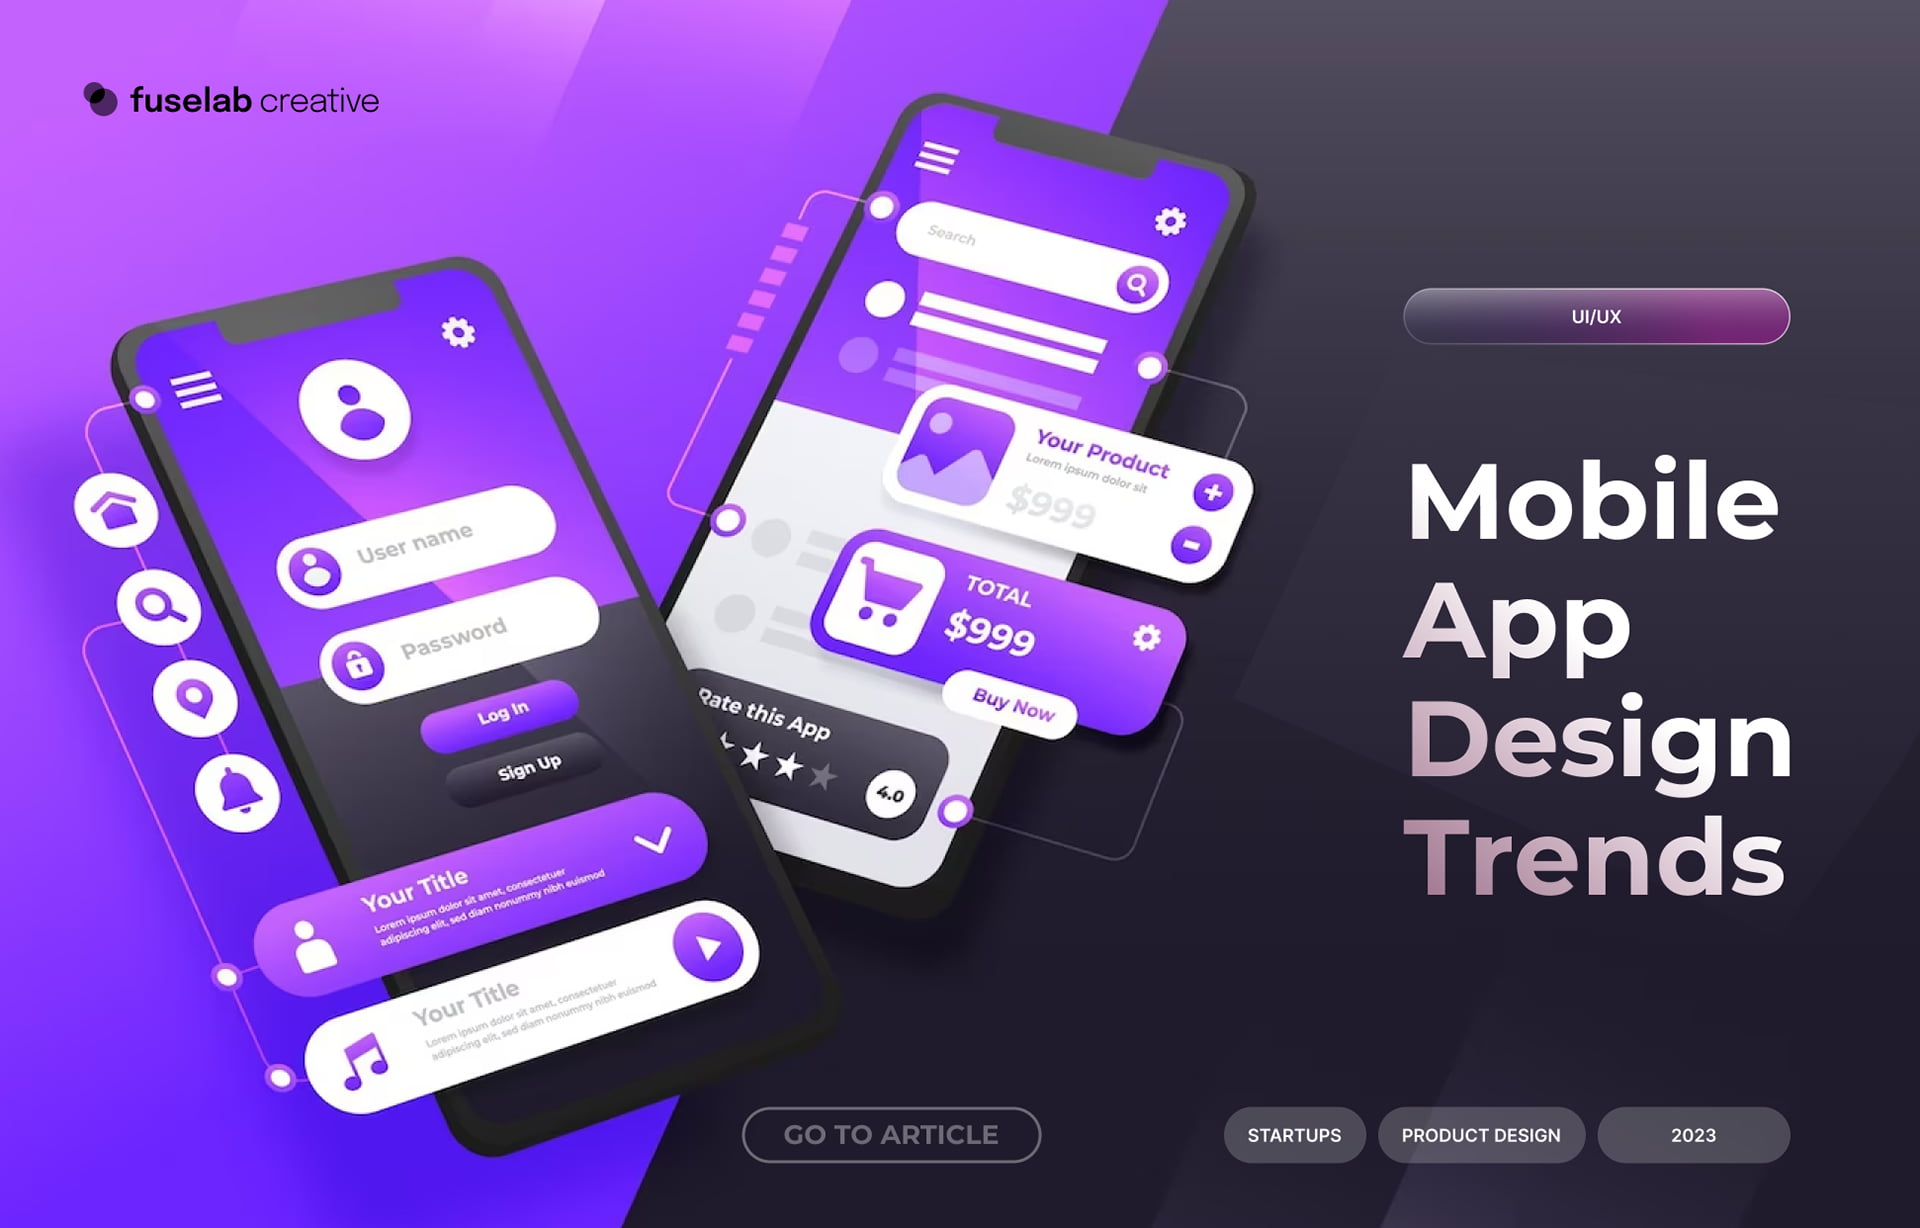 Mobile app design trends